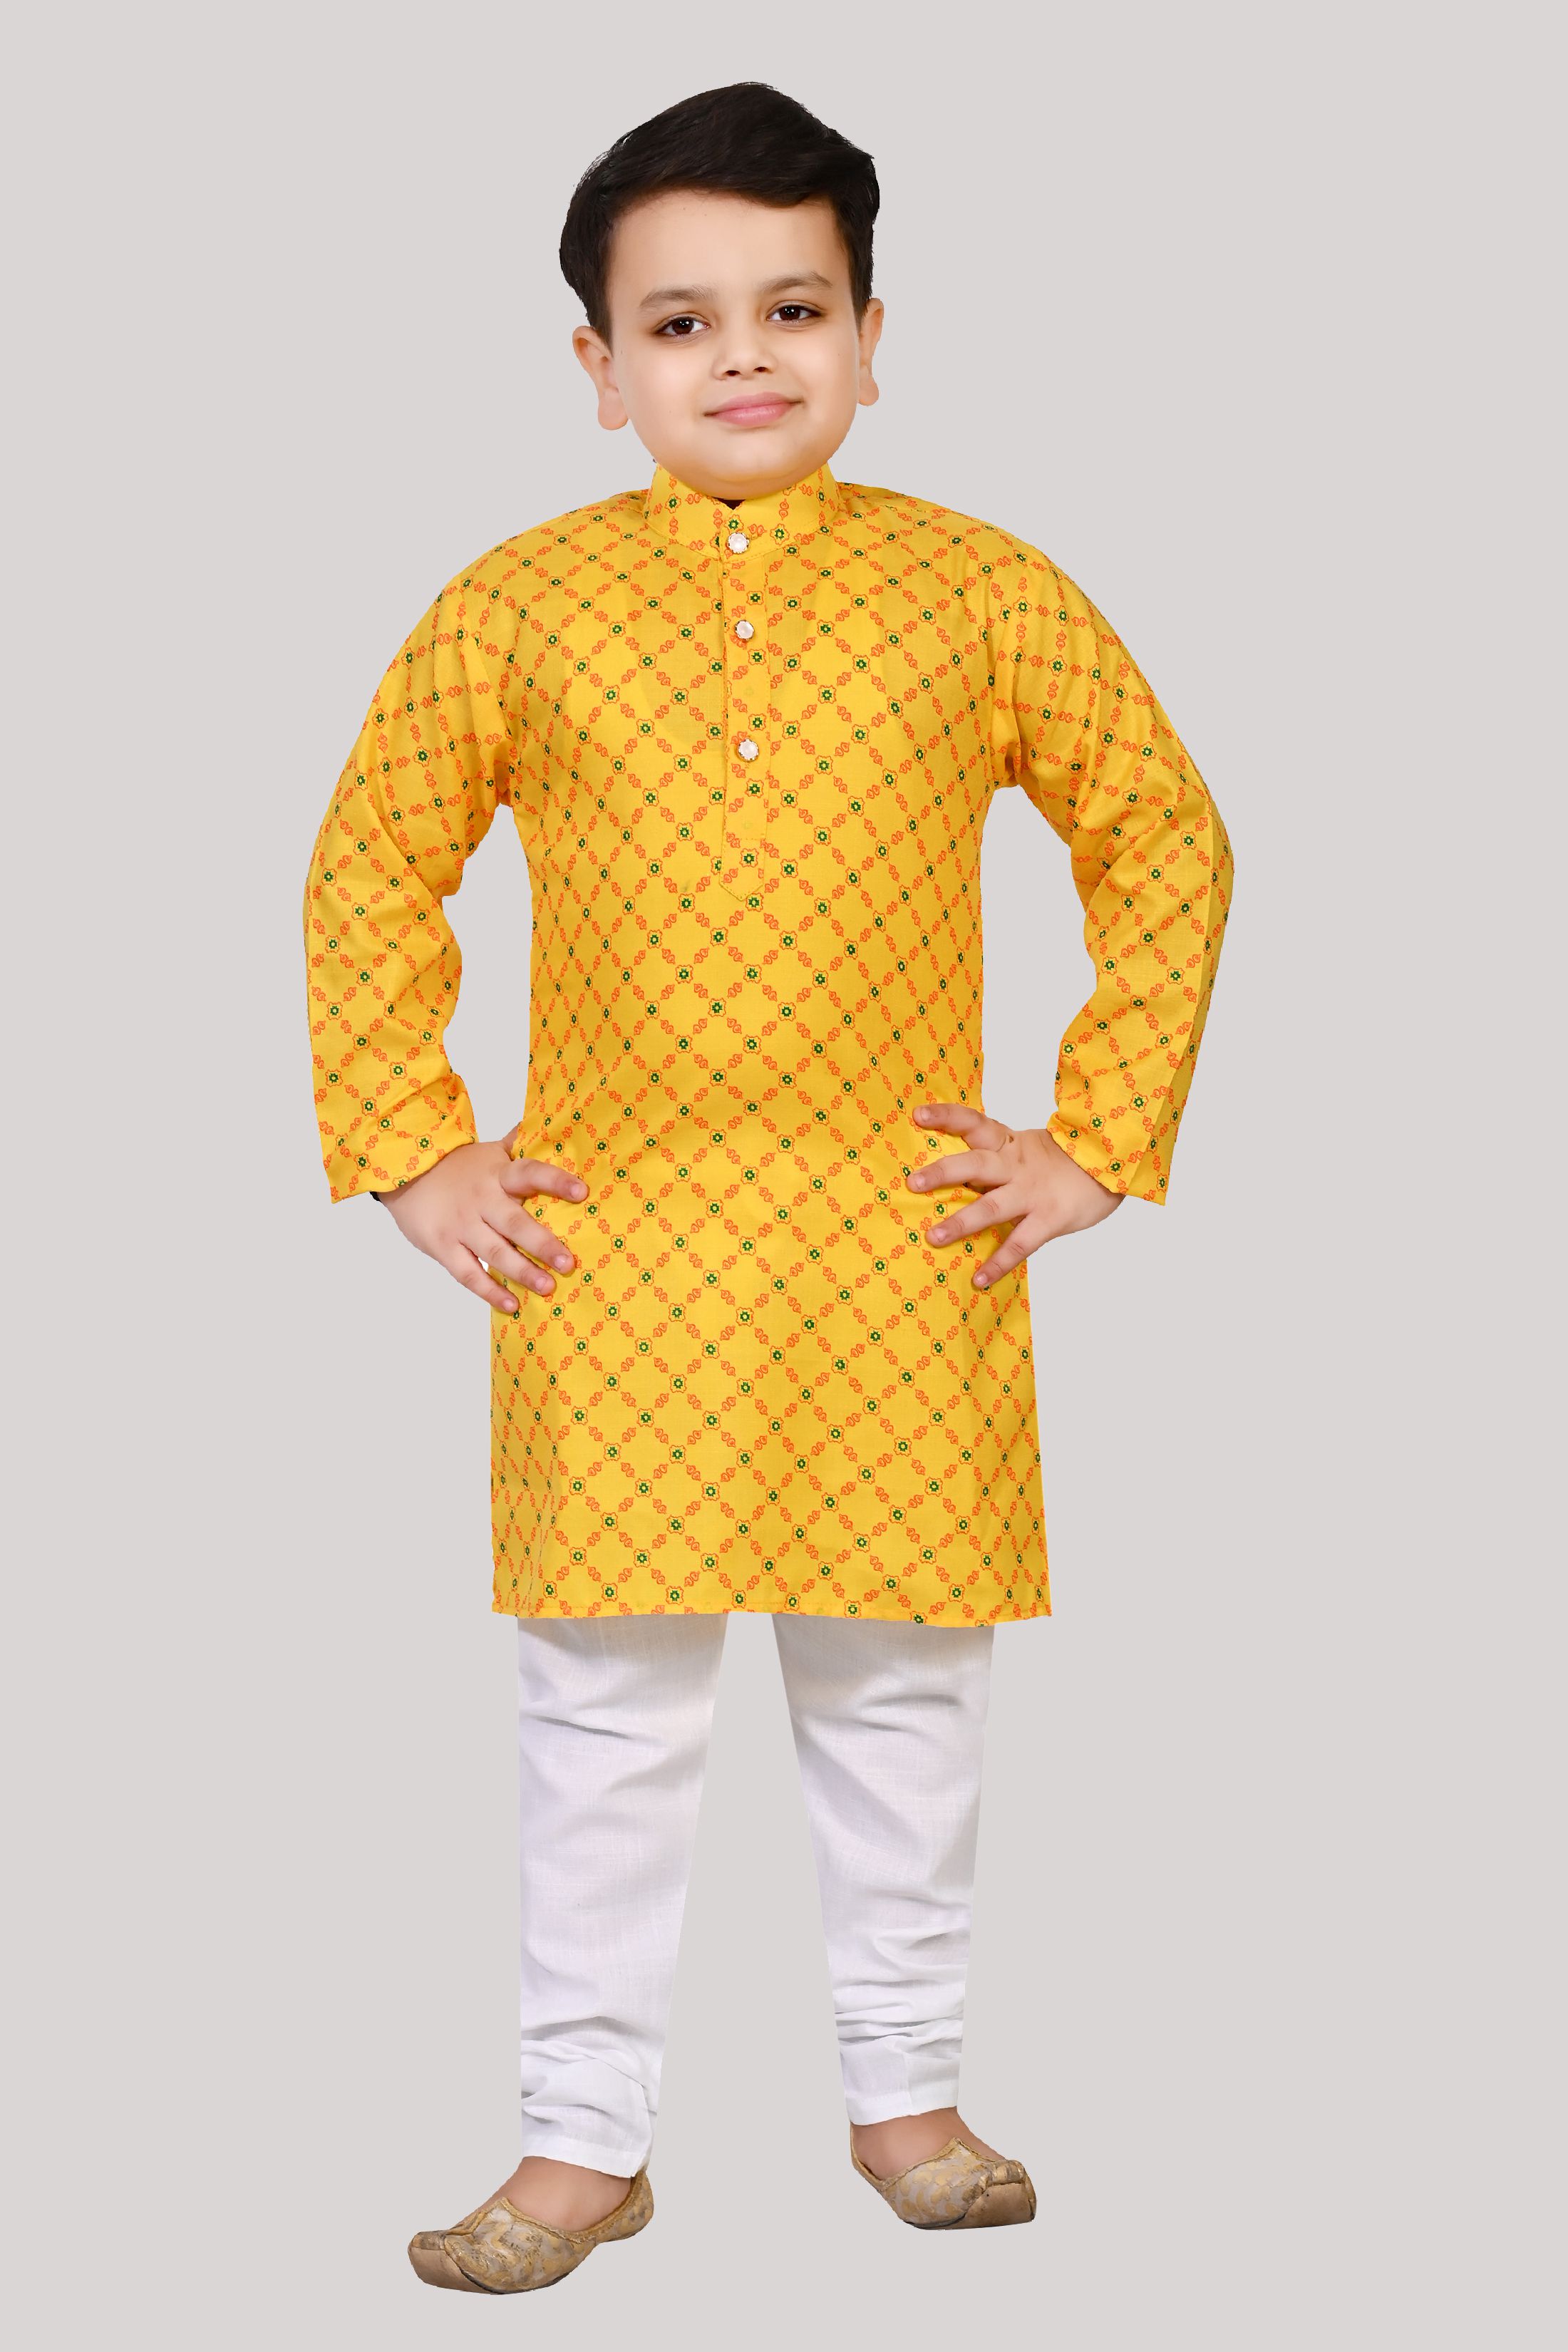     			Arshia Fashions - Yellow Cotton Boys Kurta Sets ( Pack of 1 )